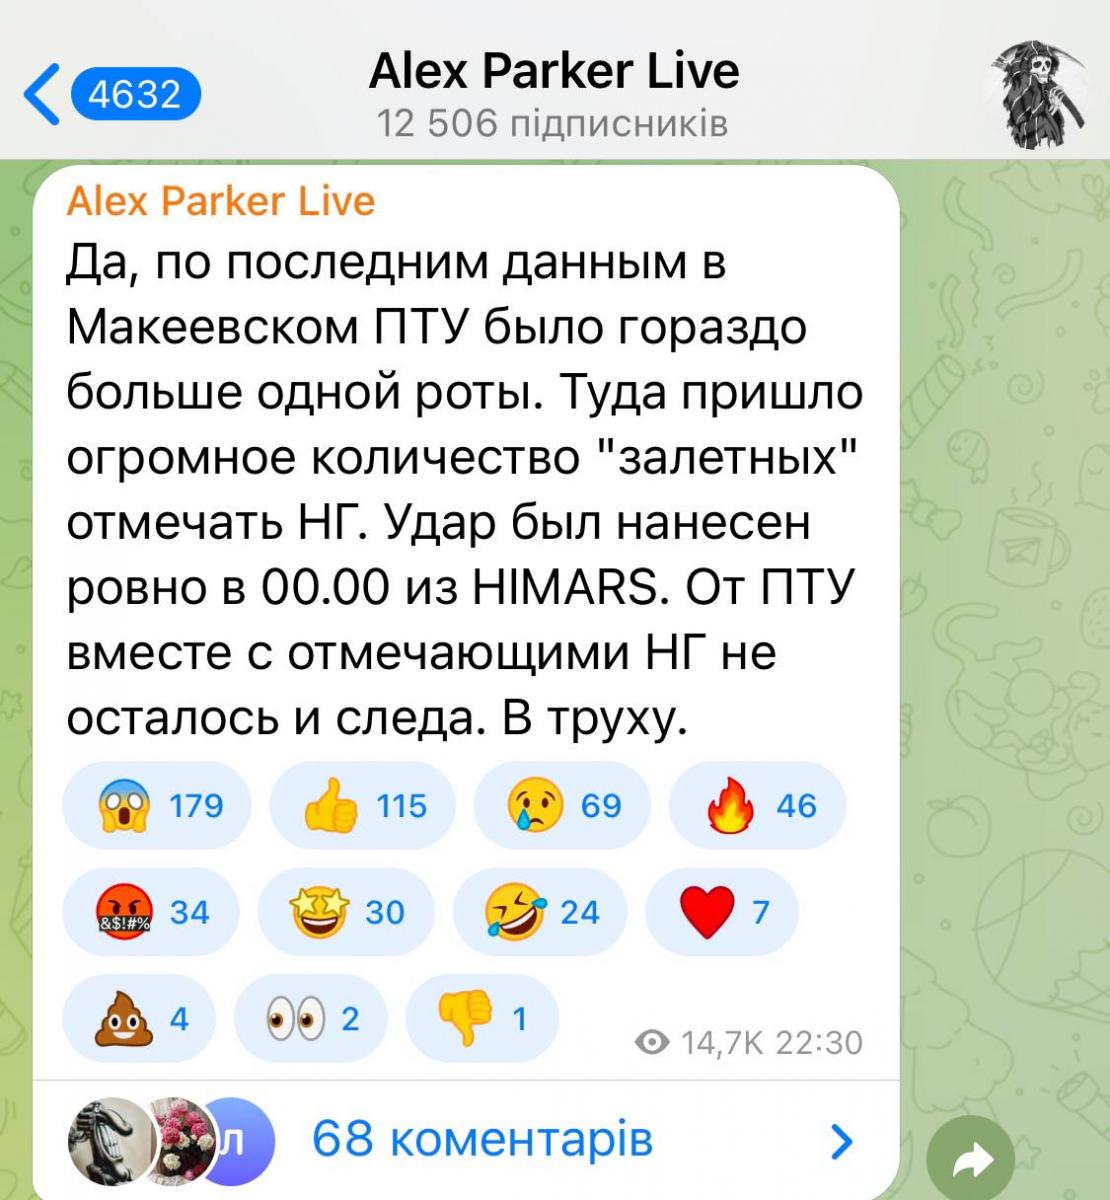 Униан телеграмм на русском сегодня фото 10